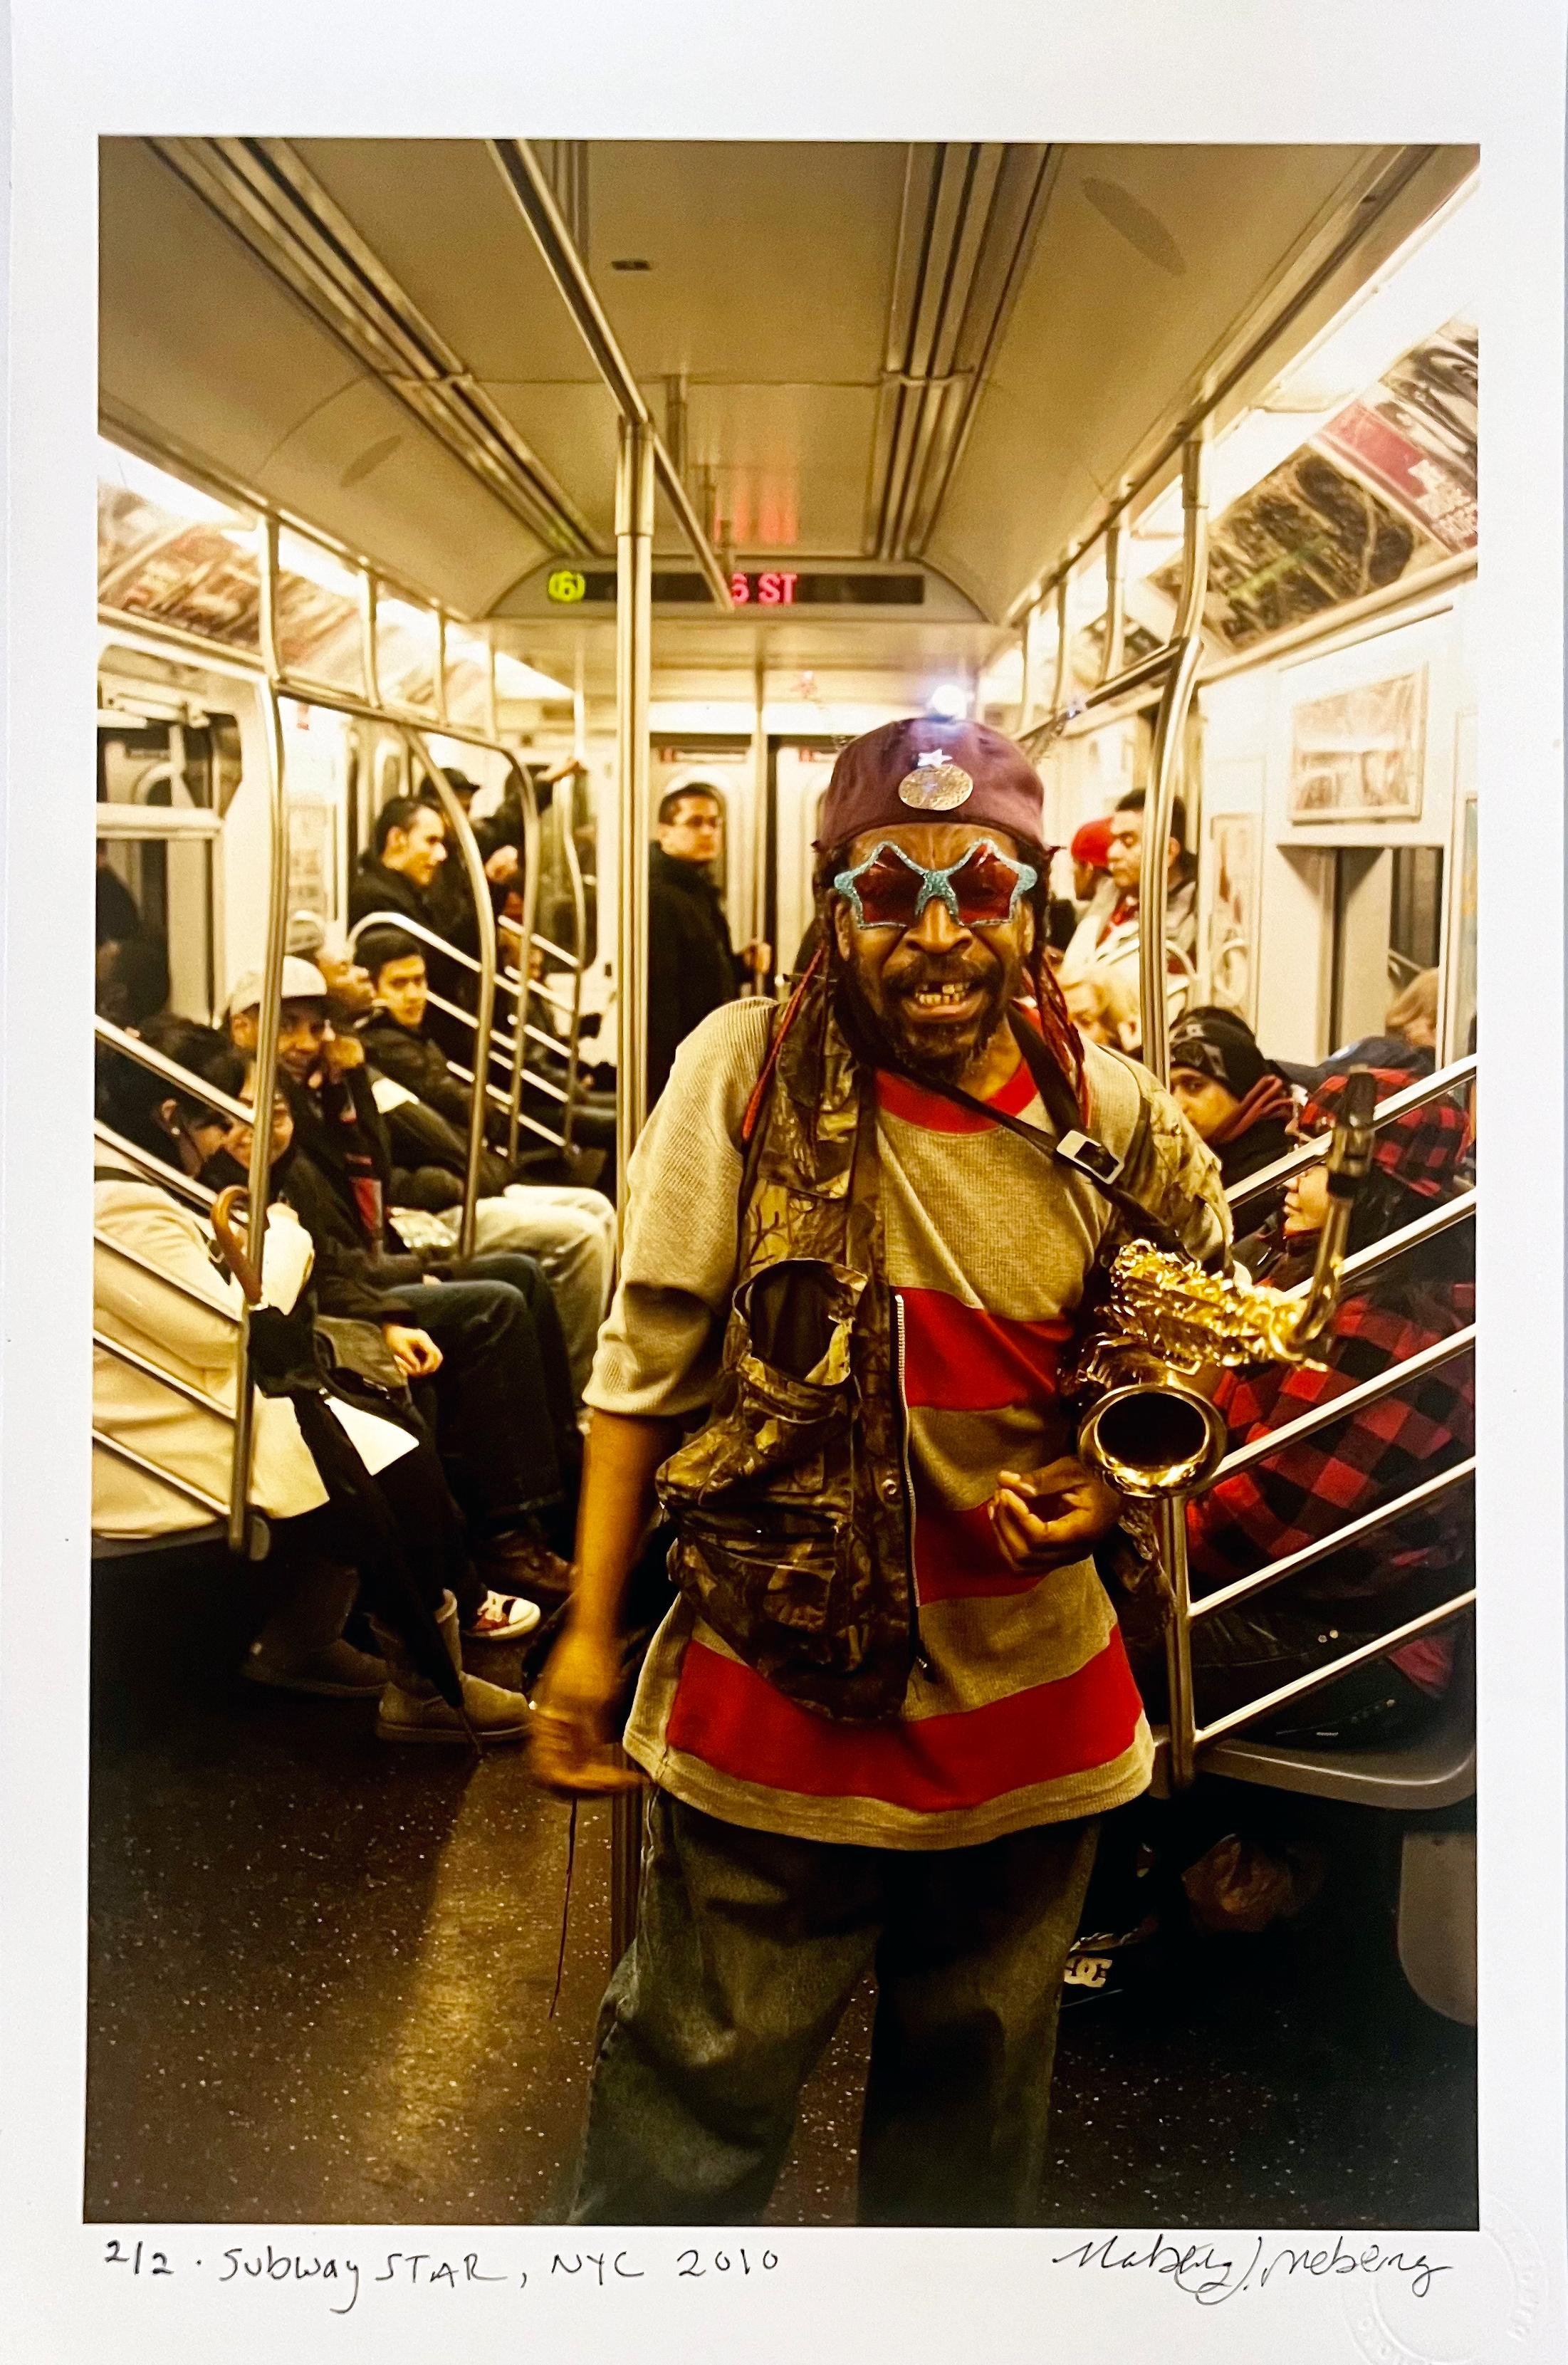 Roberta Fineberg Portrait Photograph - Subway Star, Street Photography New York City, Limited Edition Photograph